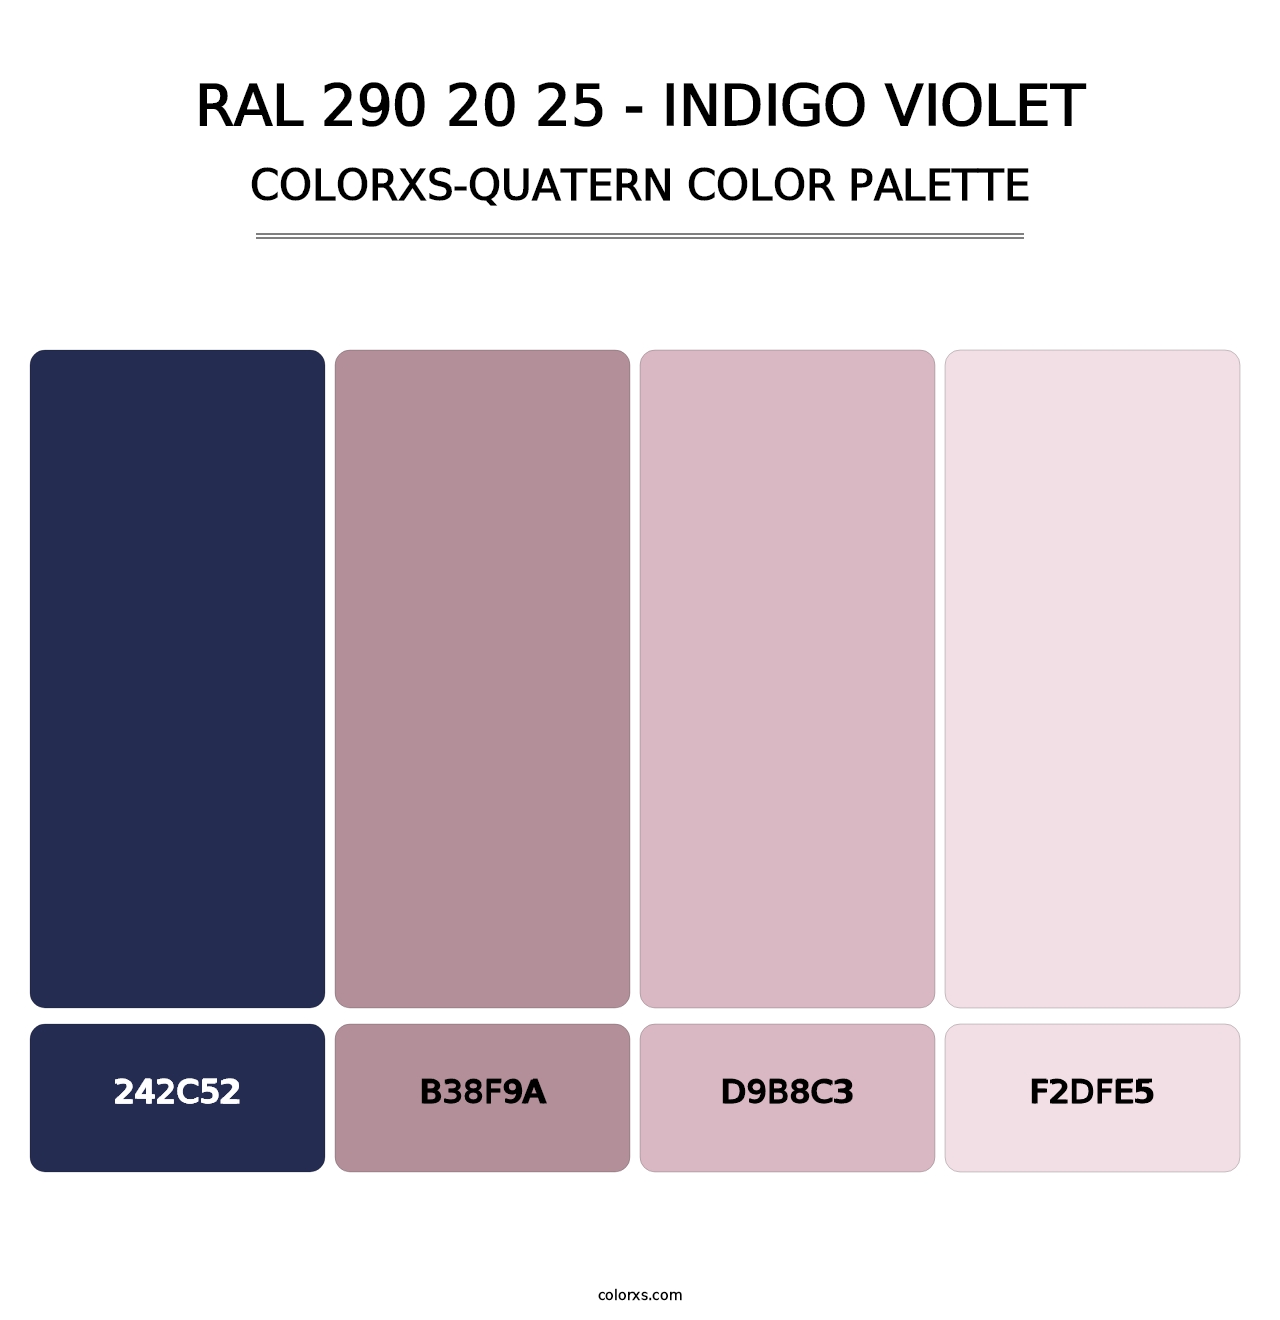 RAL 290 20 25 - Indigo Violet - Colorxs Quatern Palette